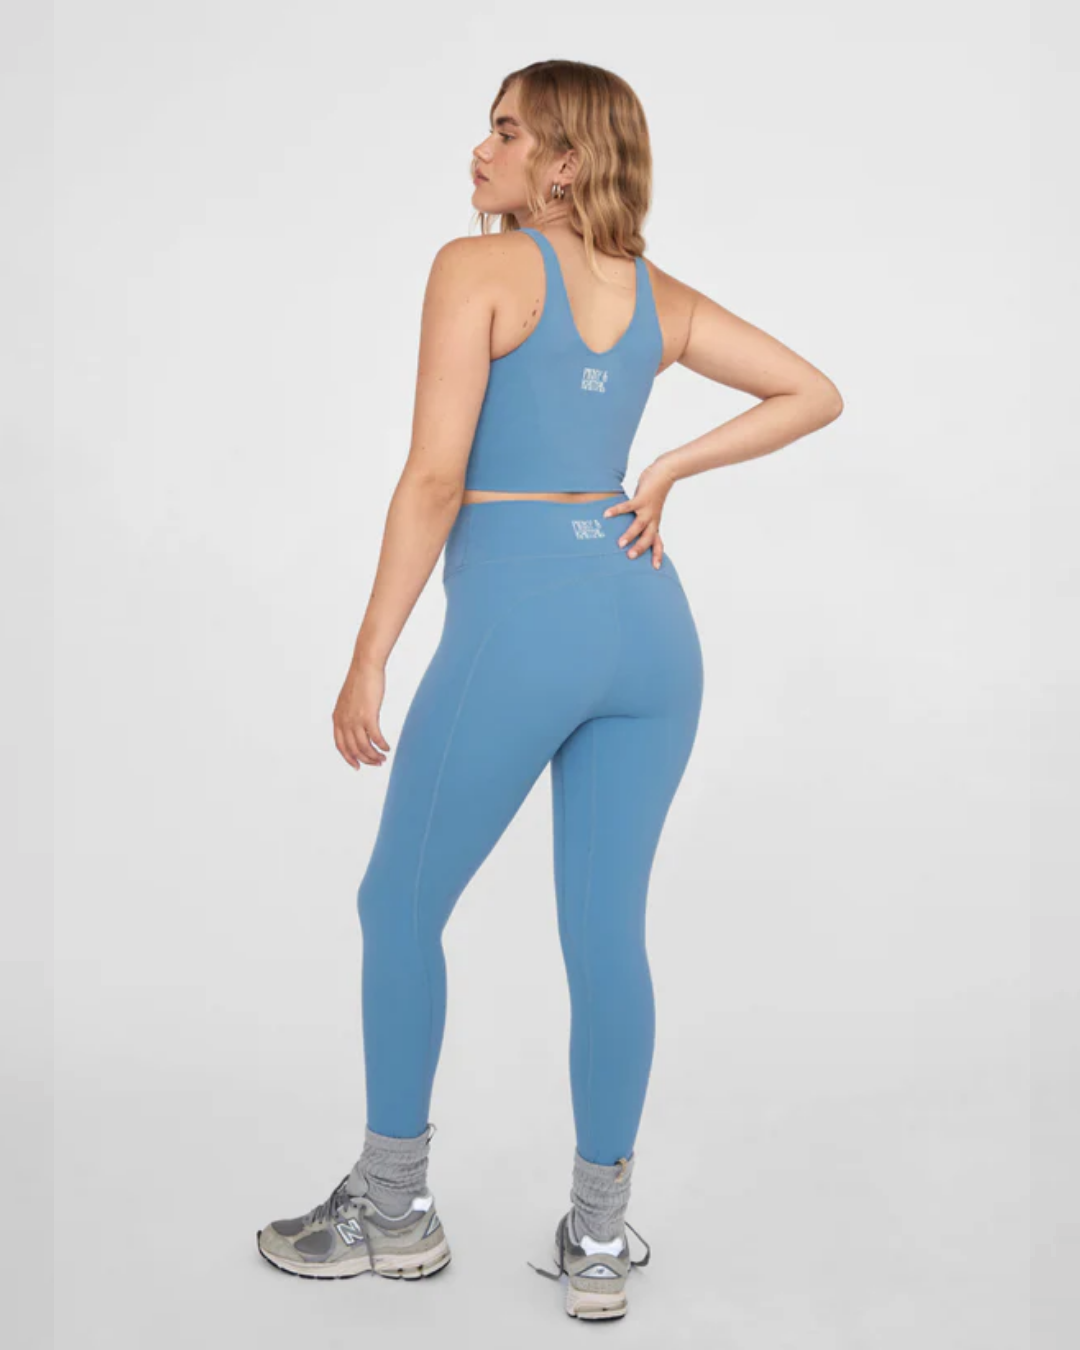 Synergy Legging - Lapis Blue Activewear by Pinky & Kamal - Prae Wellness